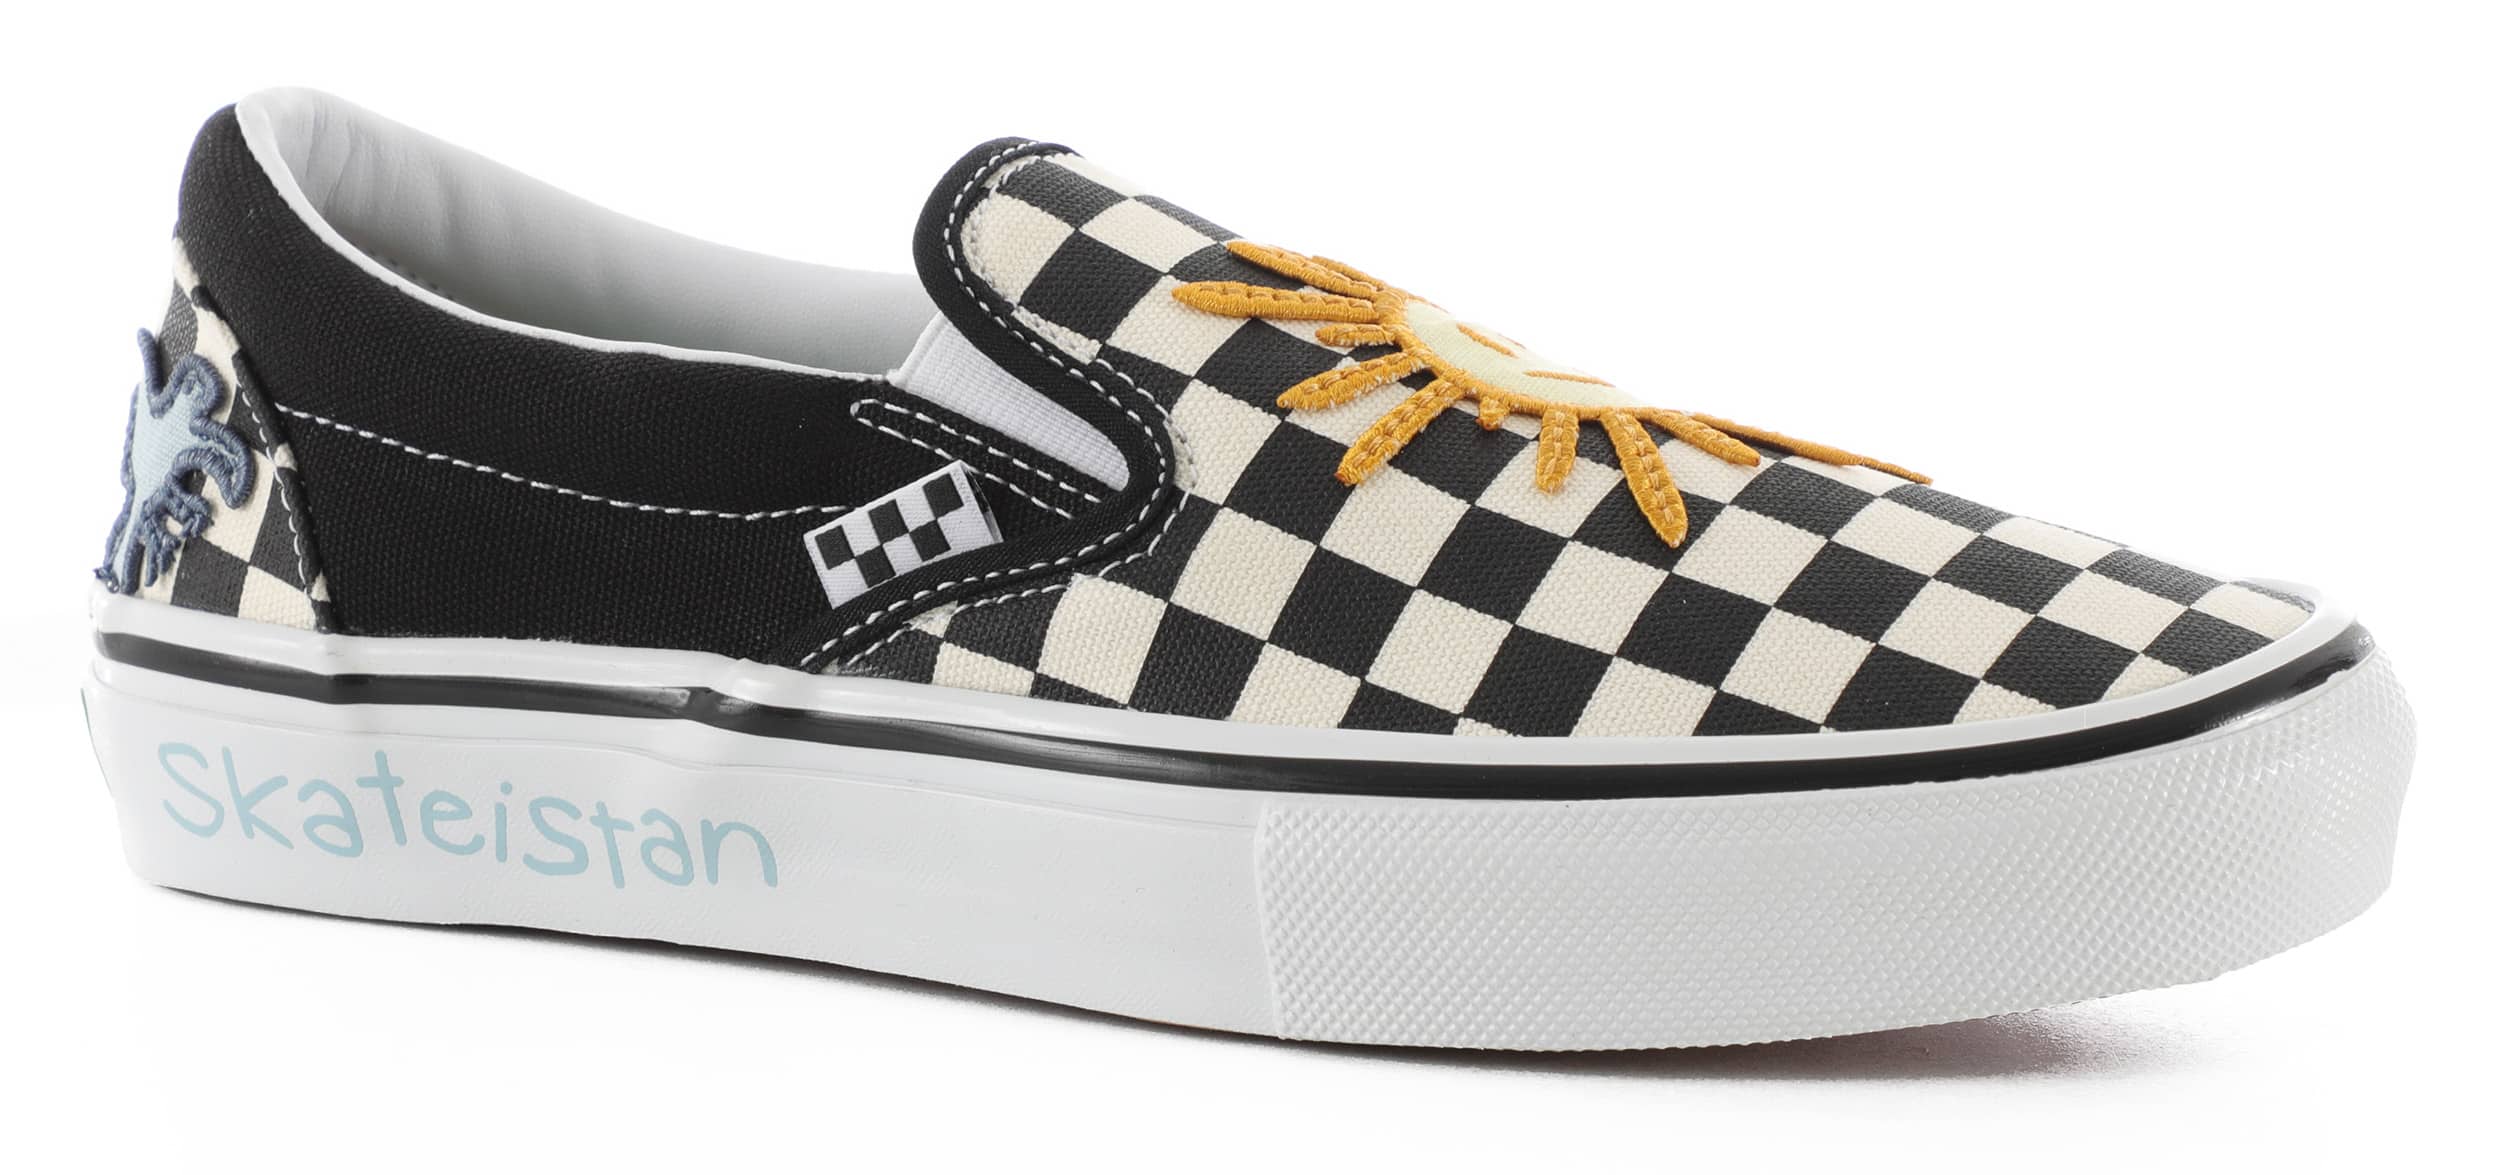 Vans Skate Slip-On Shoes - (skateistan) checkerboard | Tactics